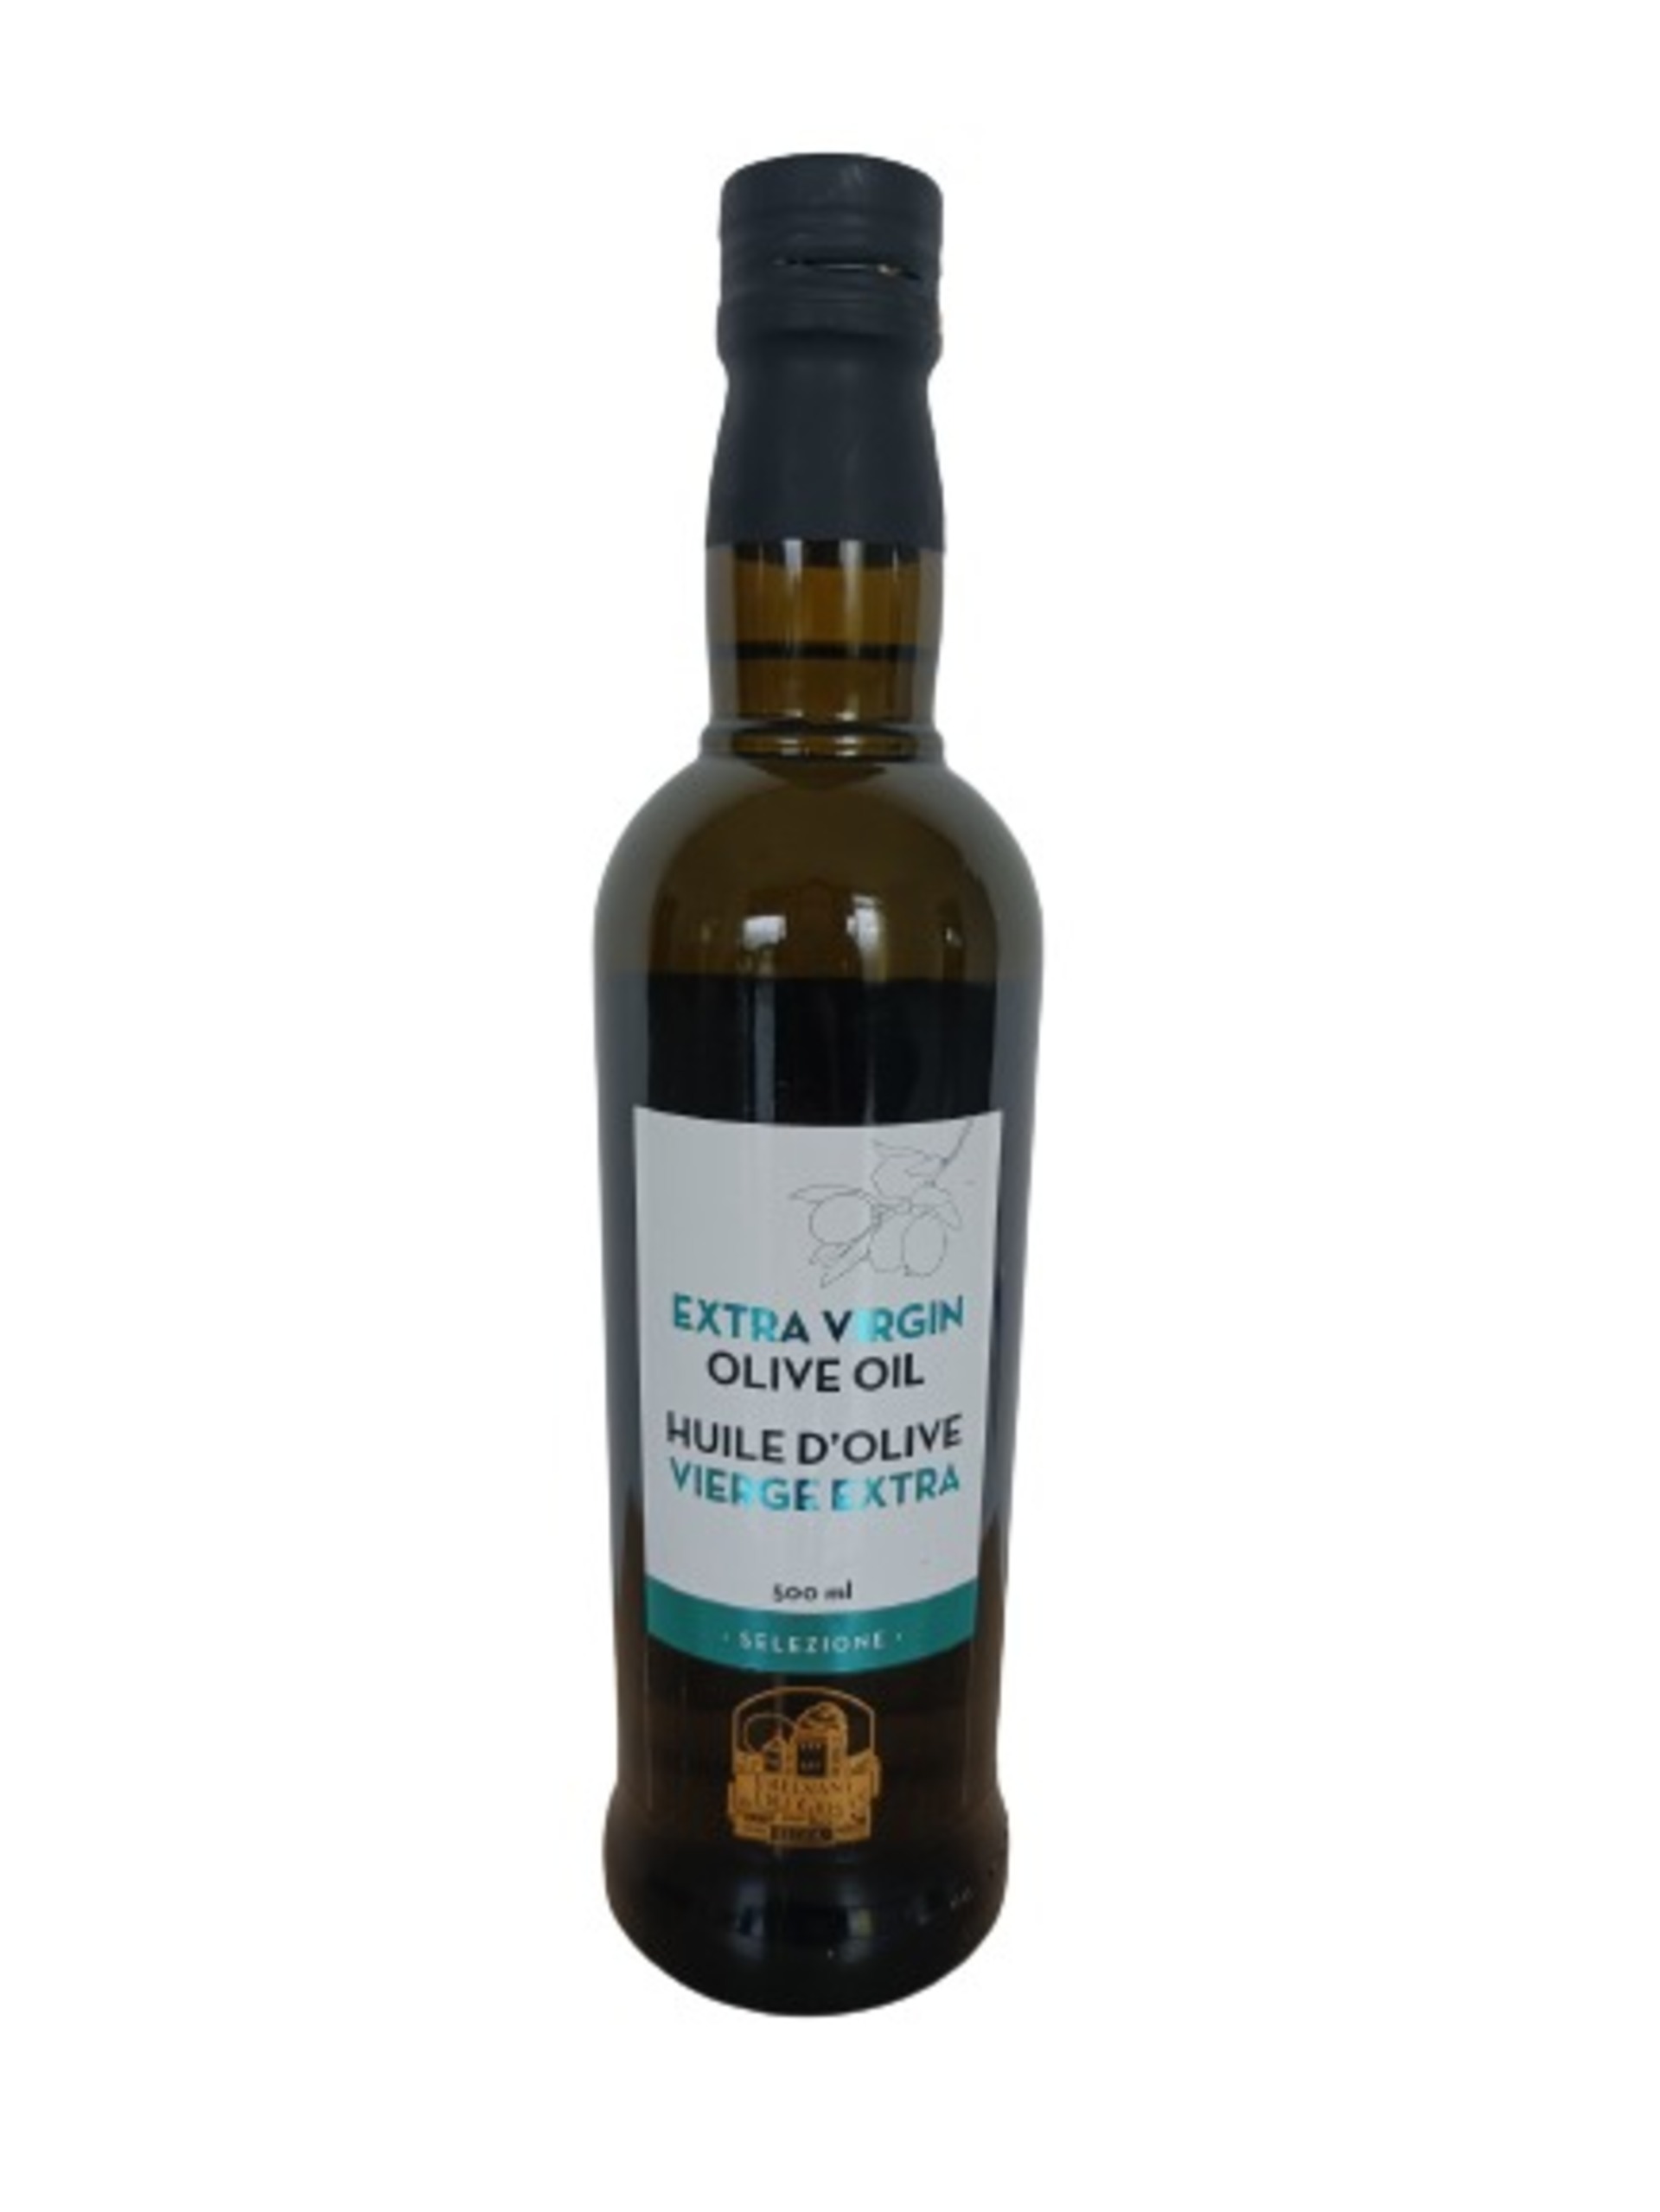 Frediani & Del Greco Extra Virgin Olive Oil 500 ml EU